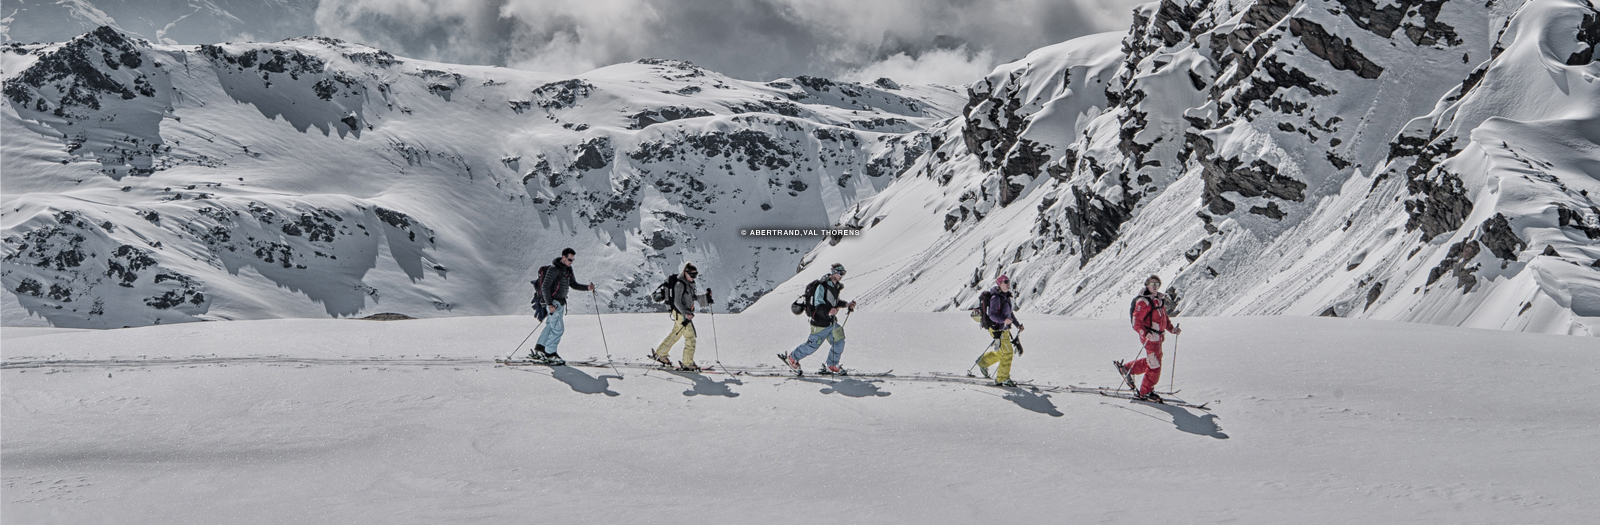 val thorens intermediate skiing